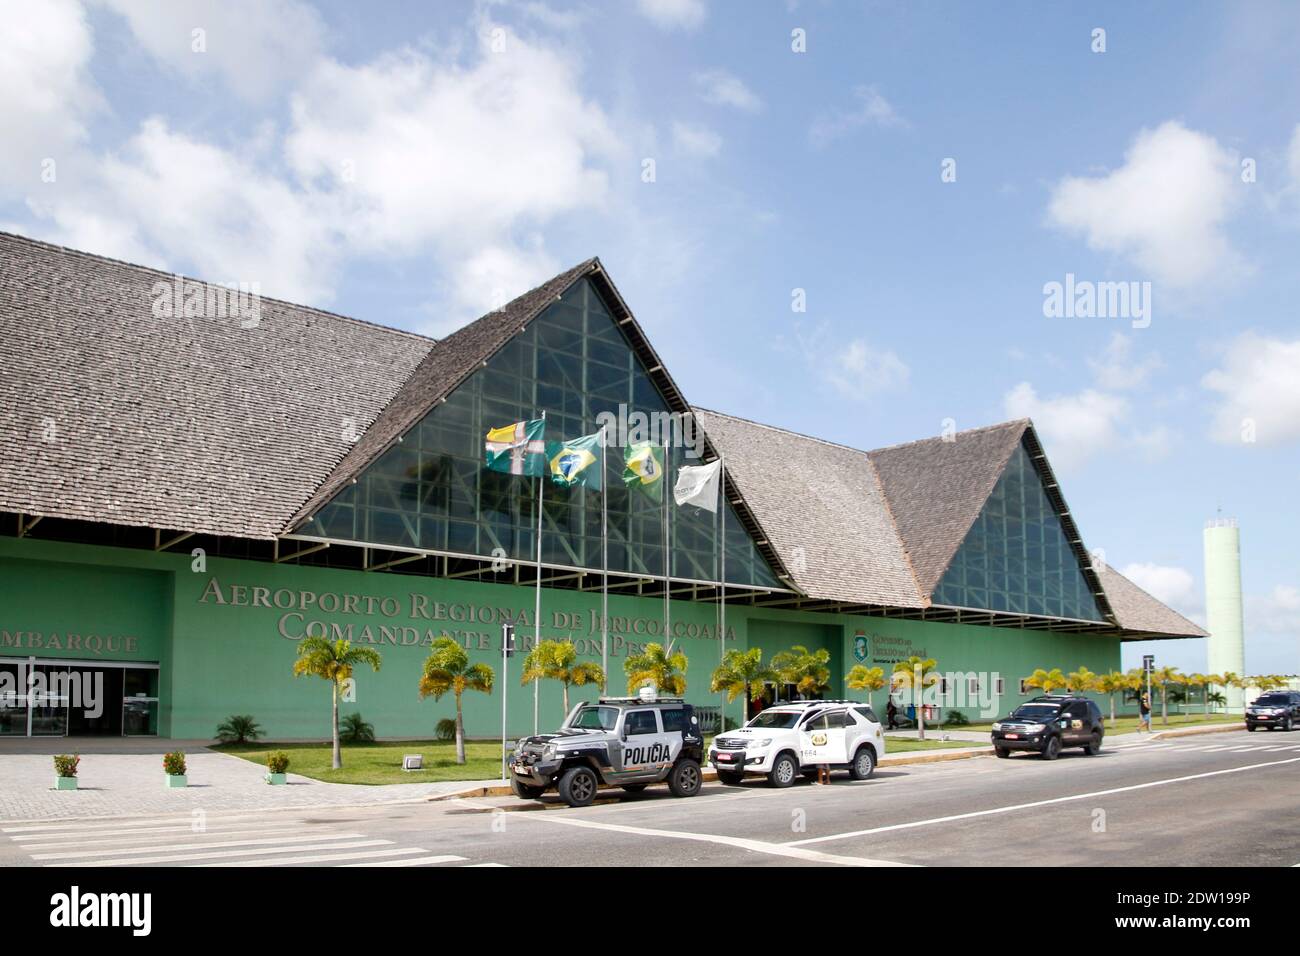 Cruz, Ceara / Brazil - January 23, 2020: external view of the regional airport of Jericoacoara - Comandante Ariston Pessoa (JJD) Stock Photo